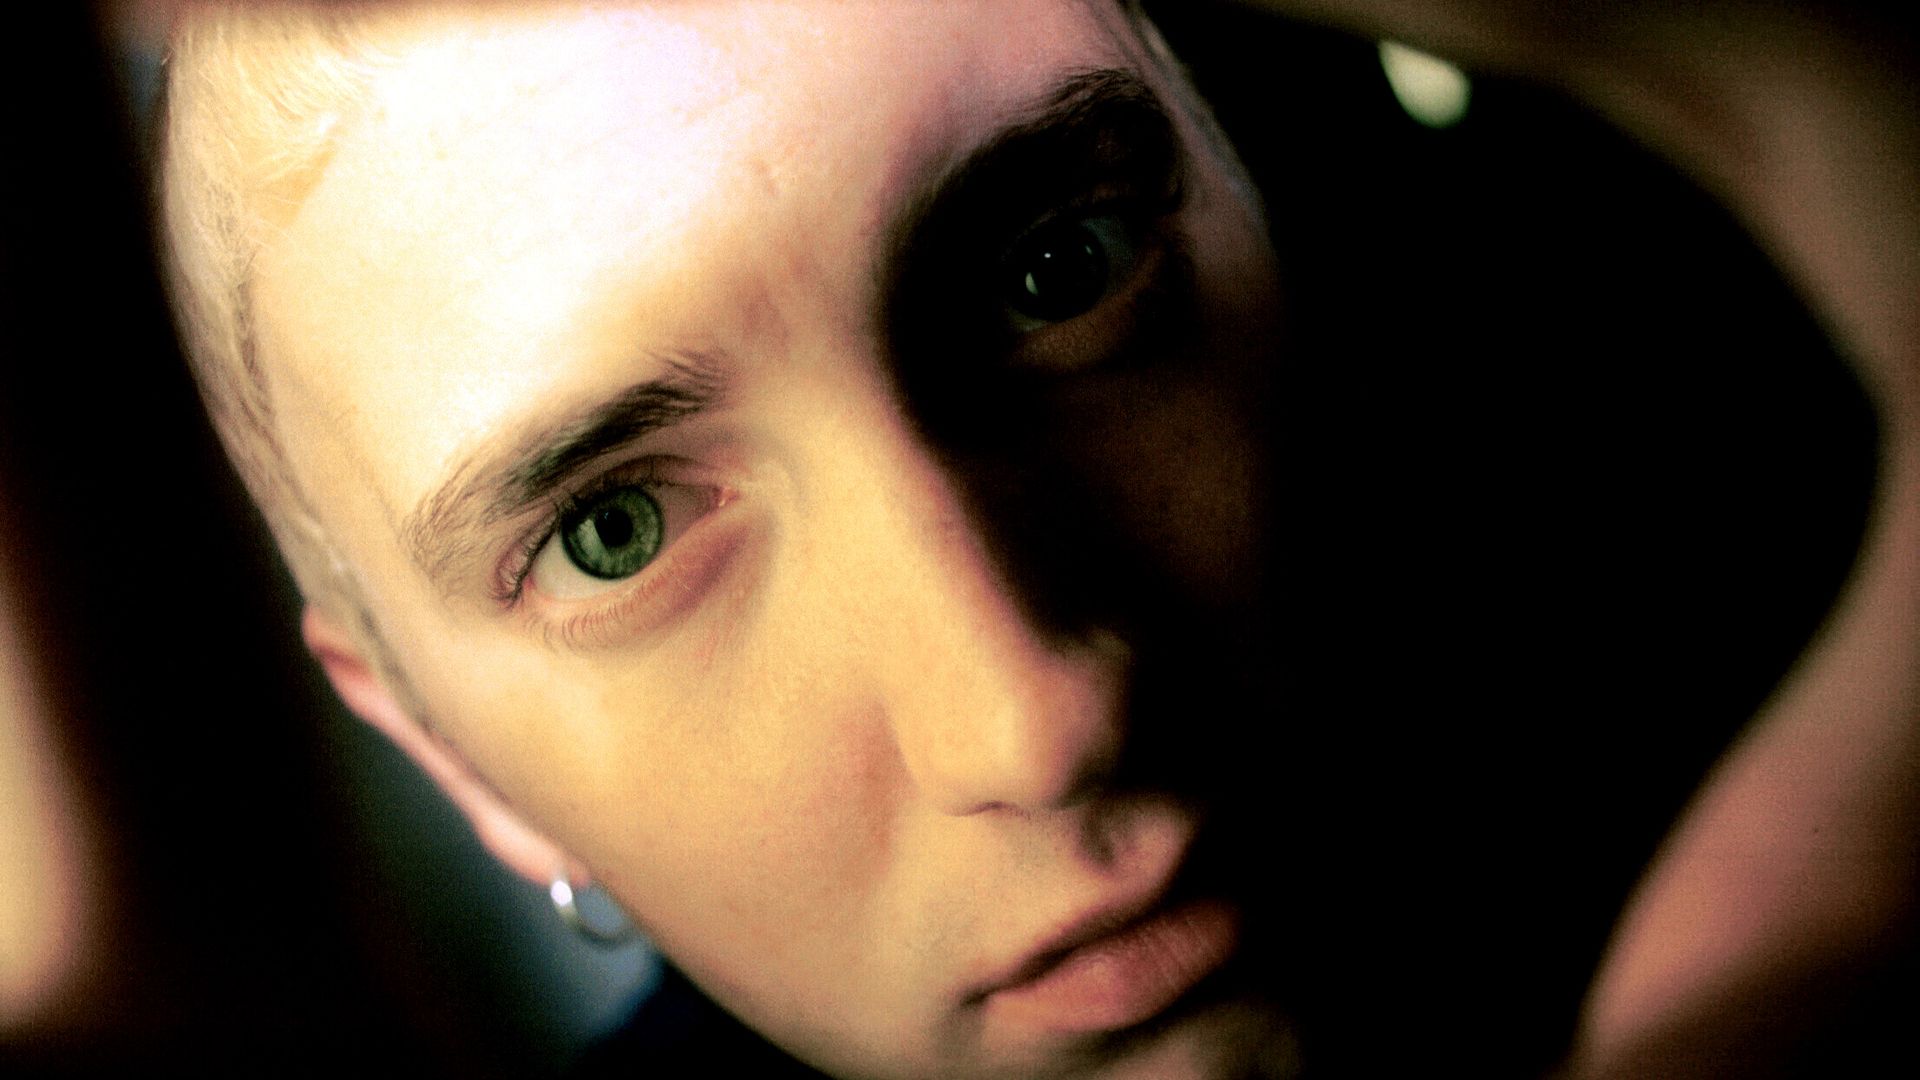 Eminem's face up close.